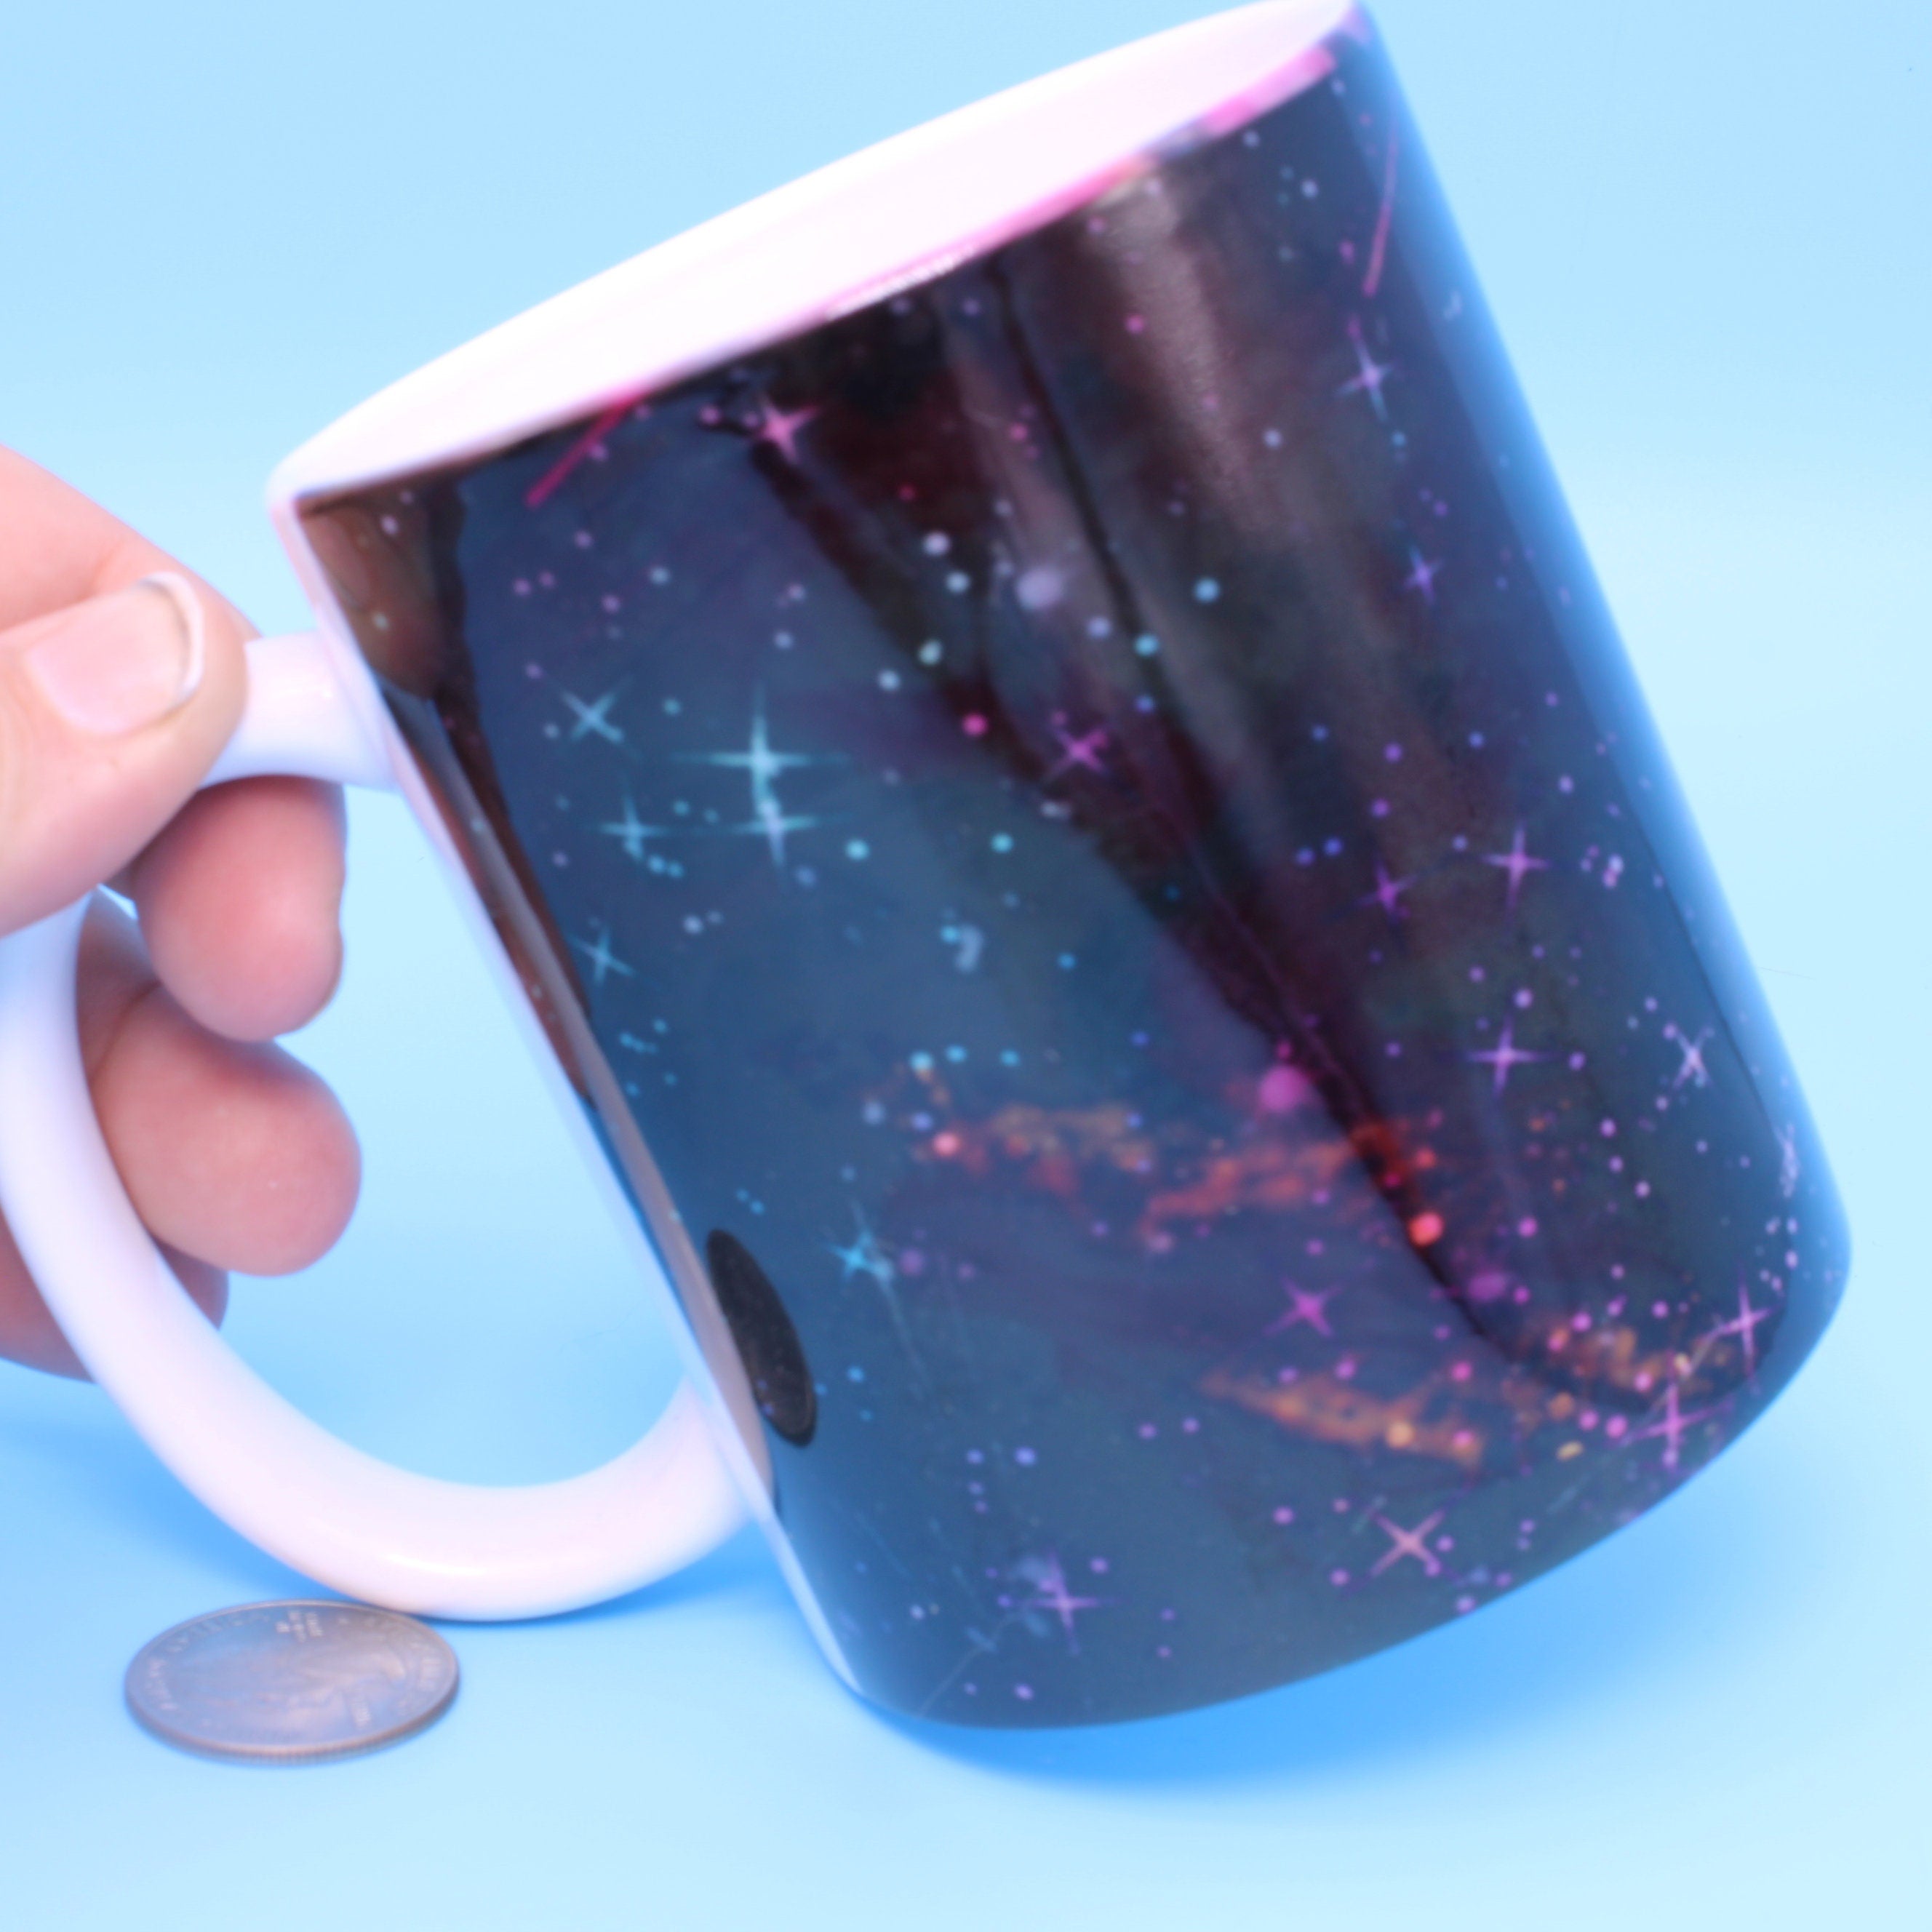 Night Sky Ceramic Mug - Hot chocolate | Coffee | Hot Tea 11 0z. Perfect gift!